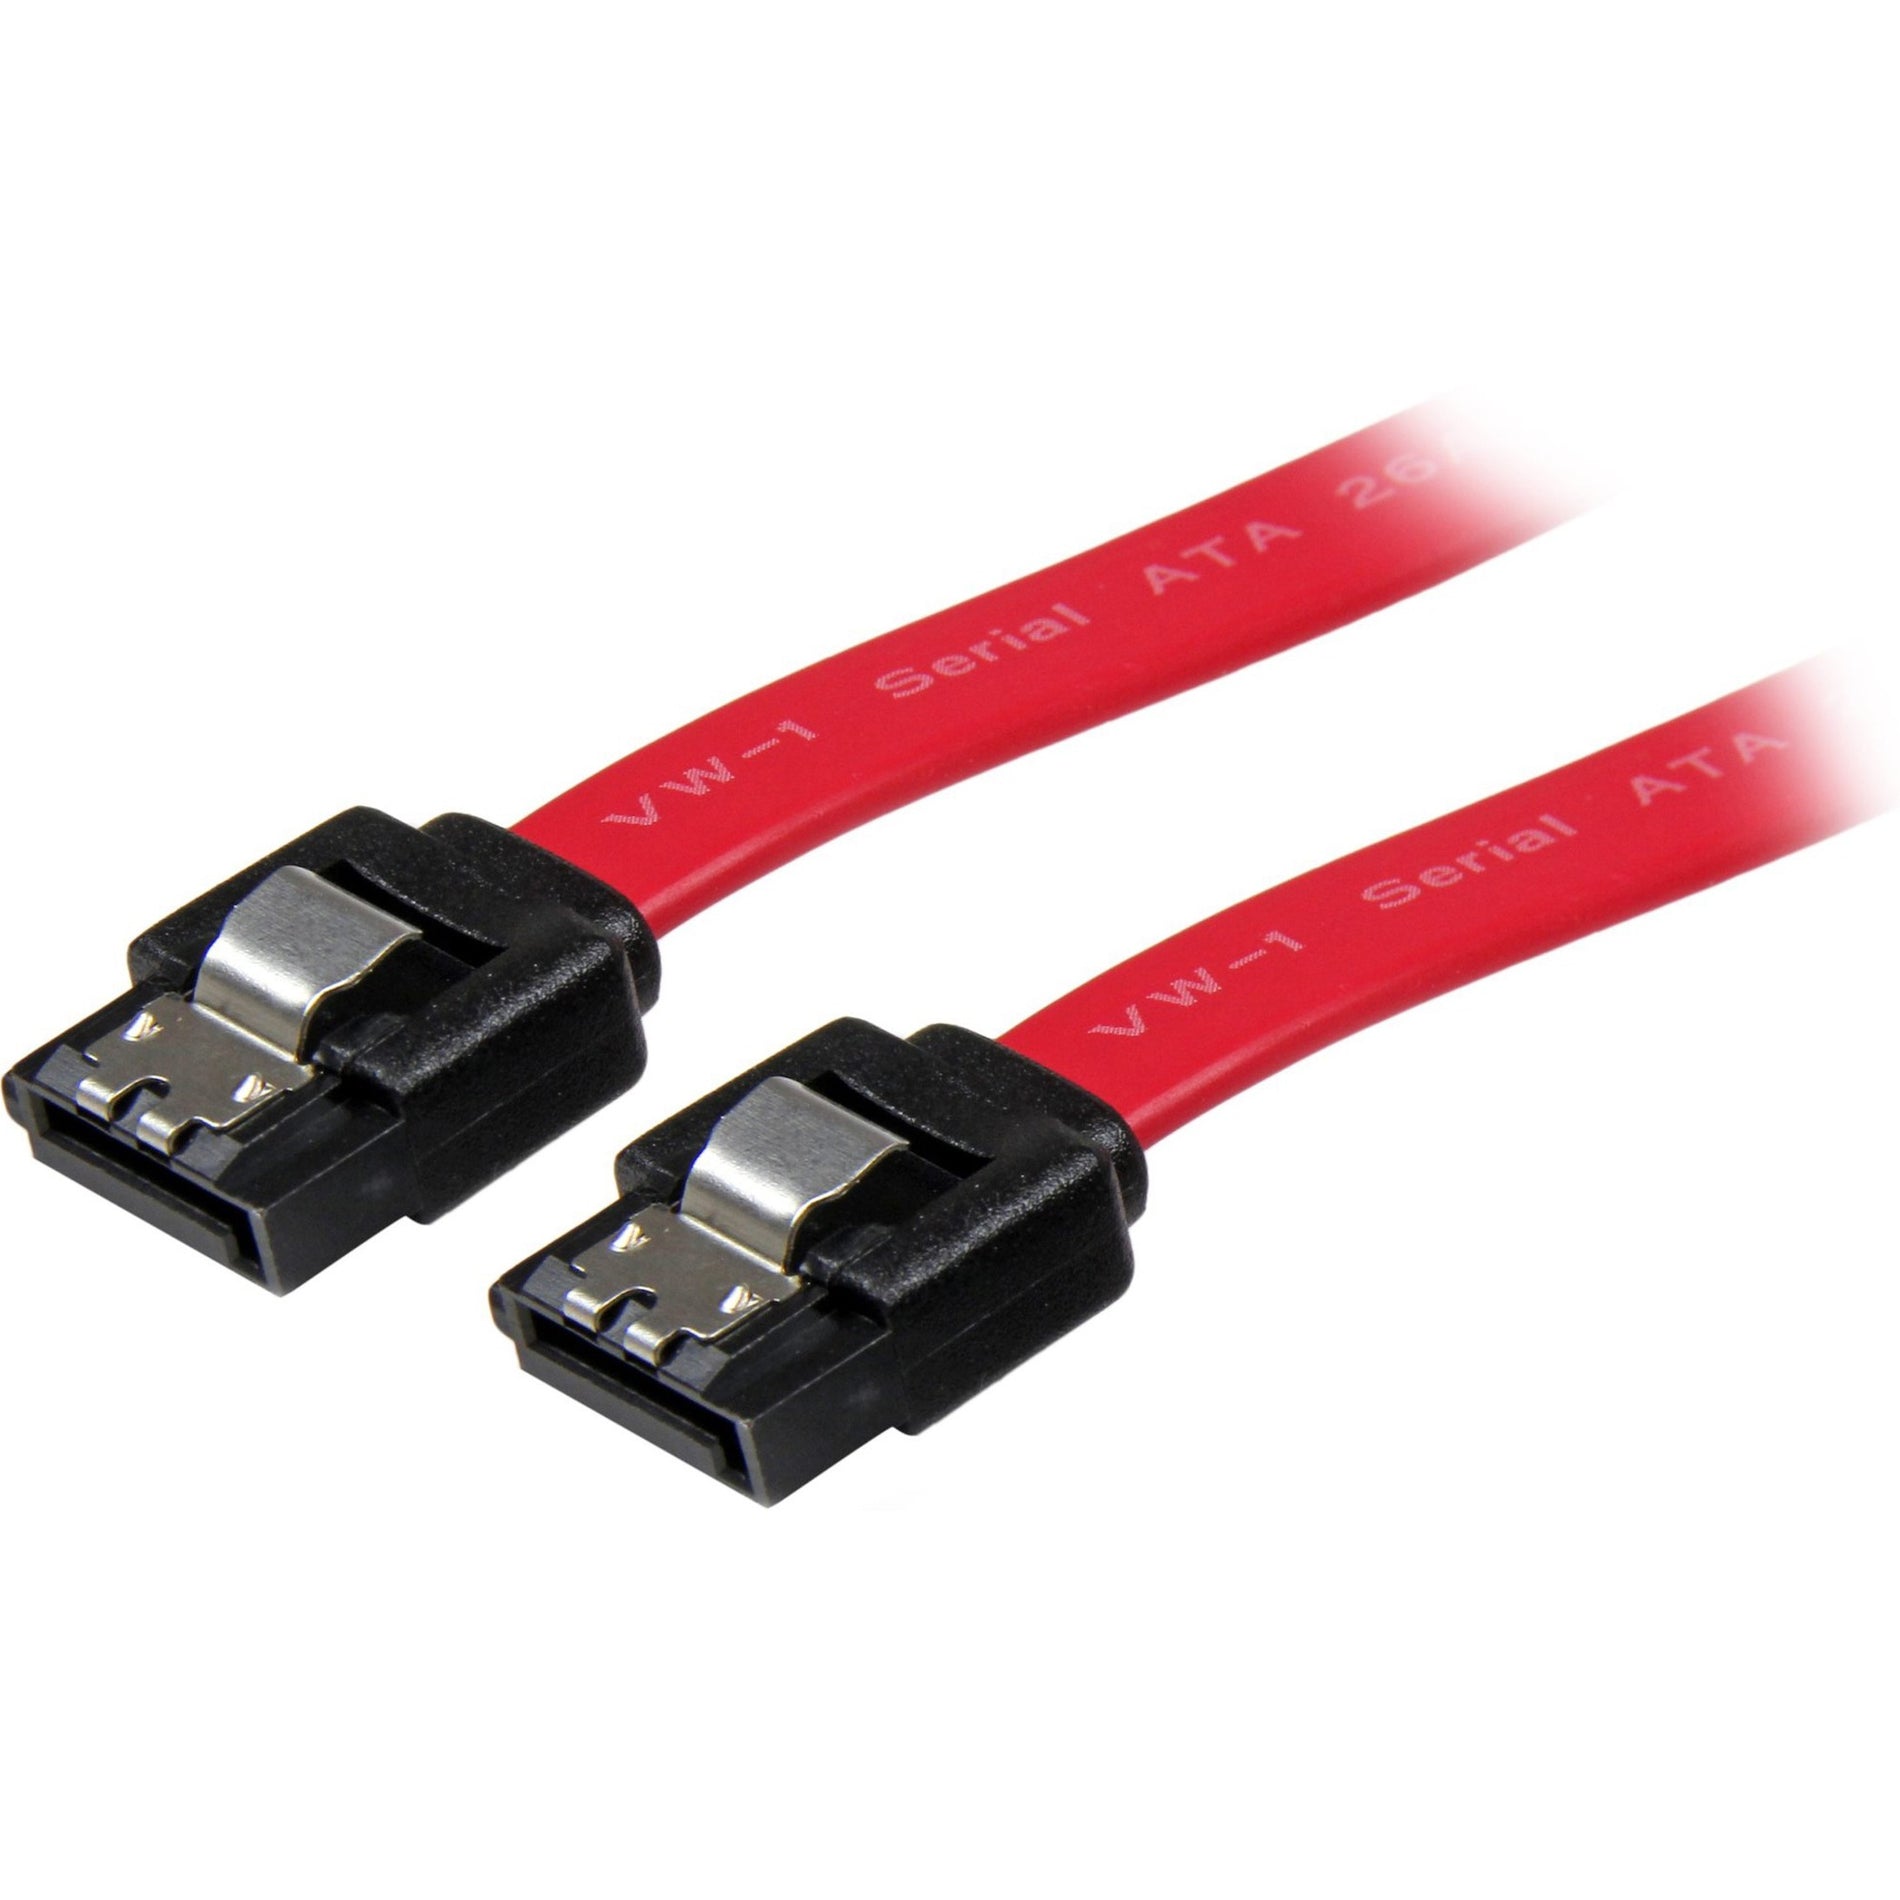 StarTech.com LSATA12 Latching SATA Cable, 1 ft, 6 Gbit/s Data Transfer Rate, Flexible